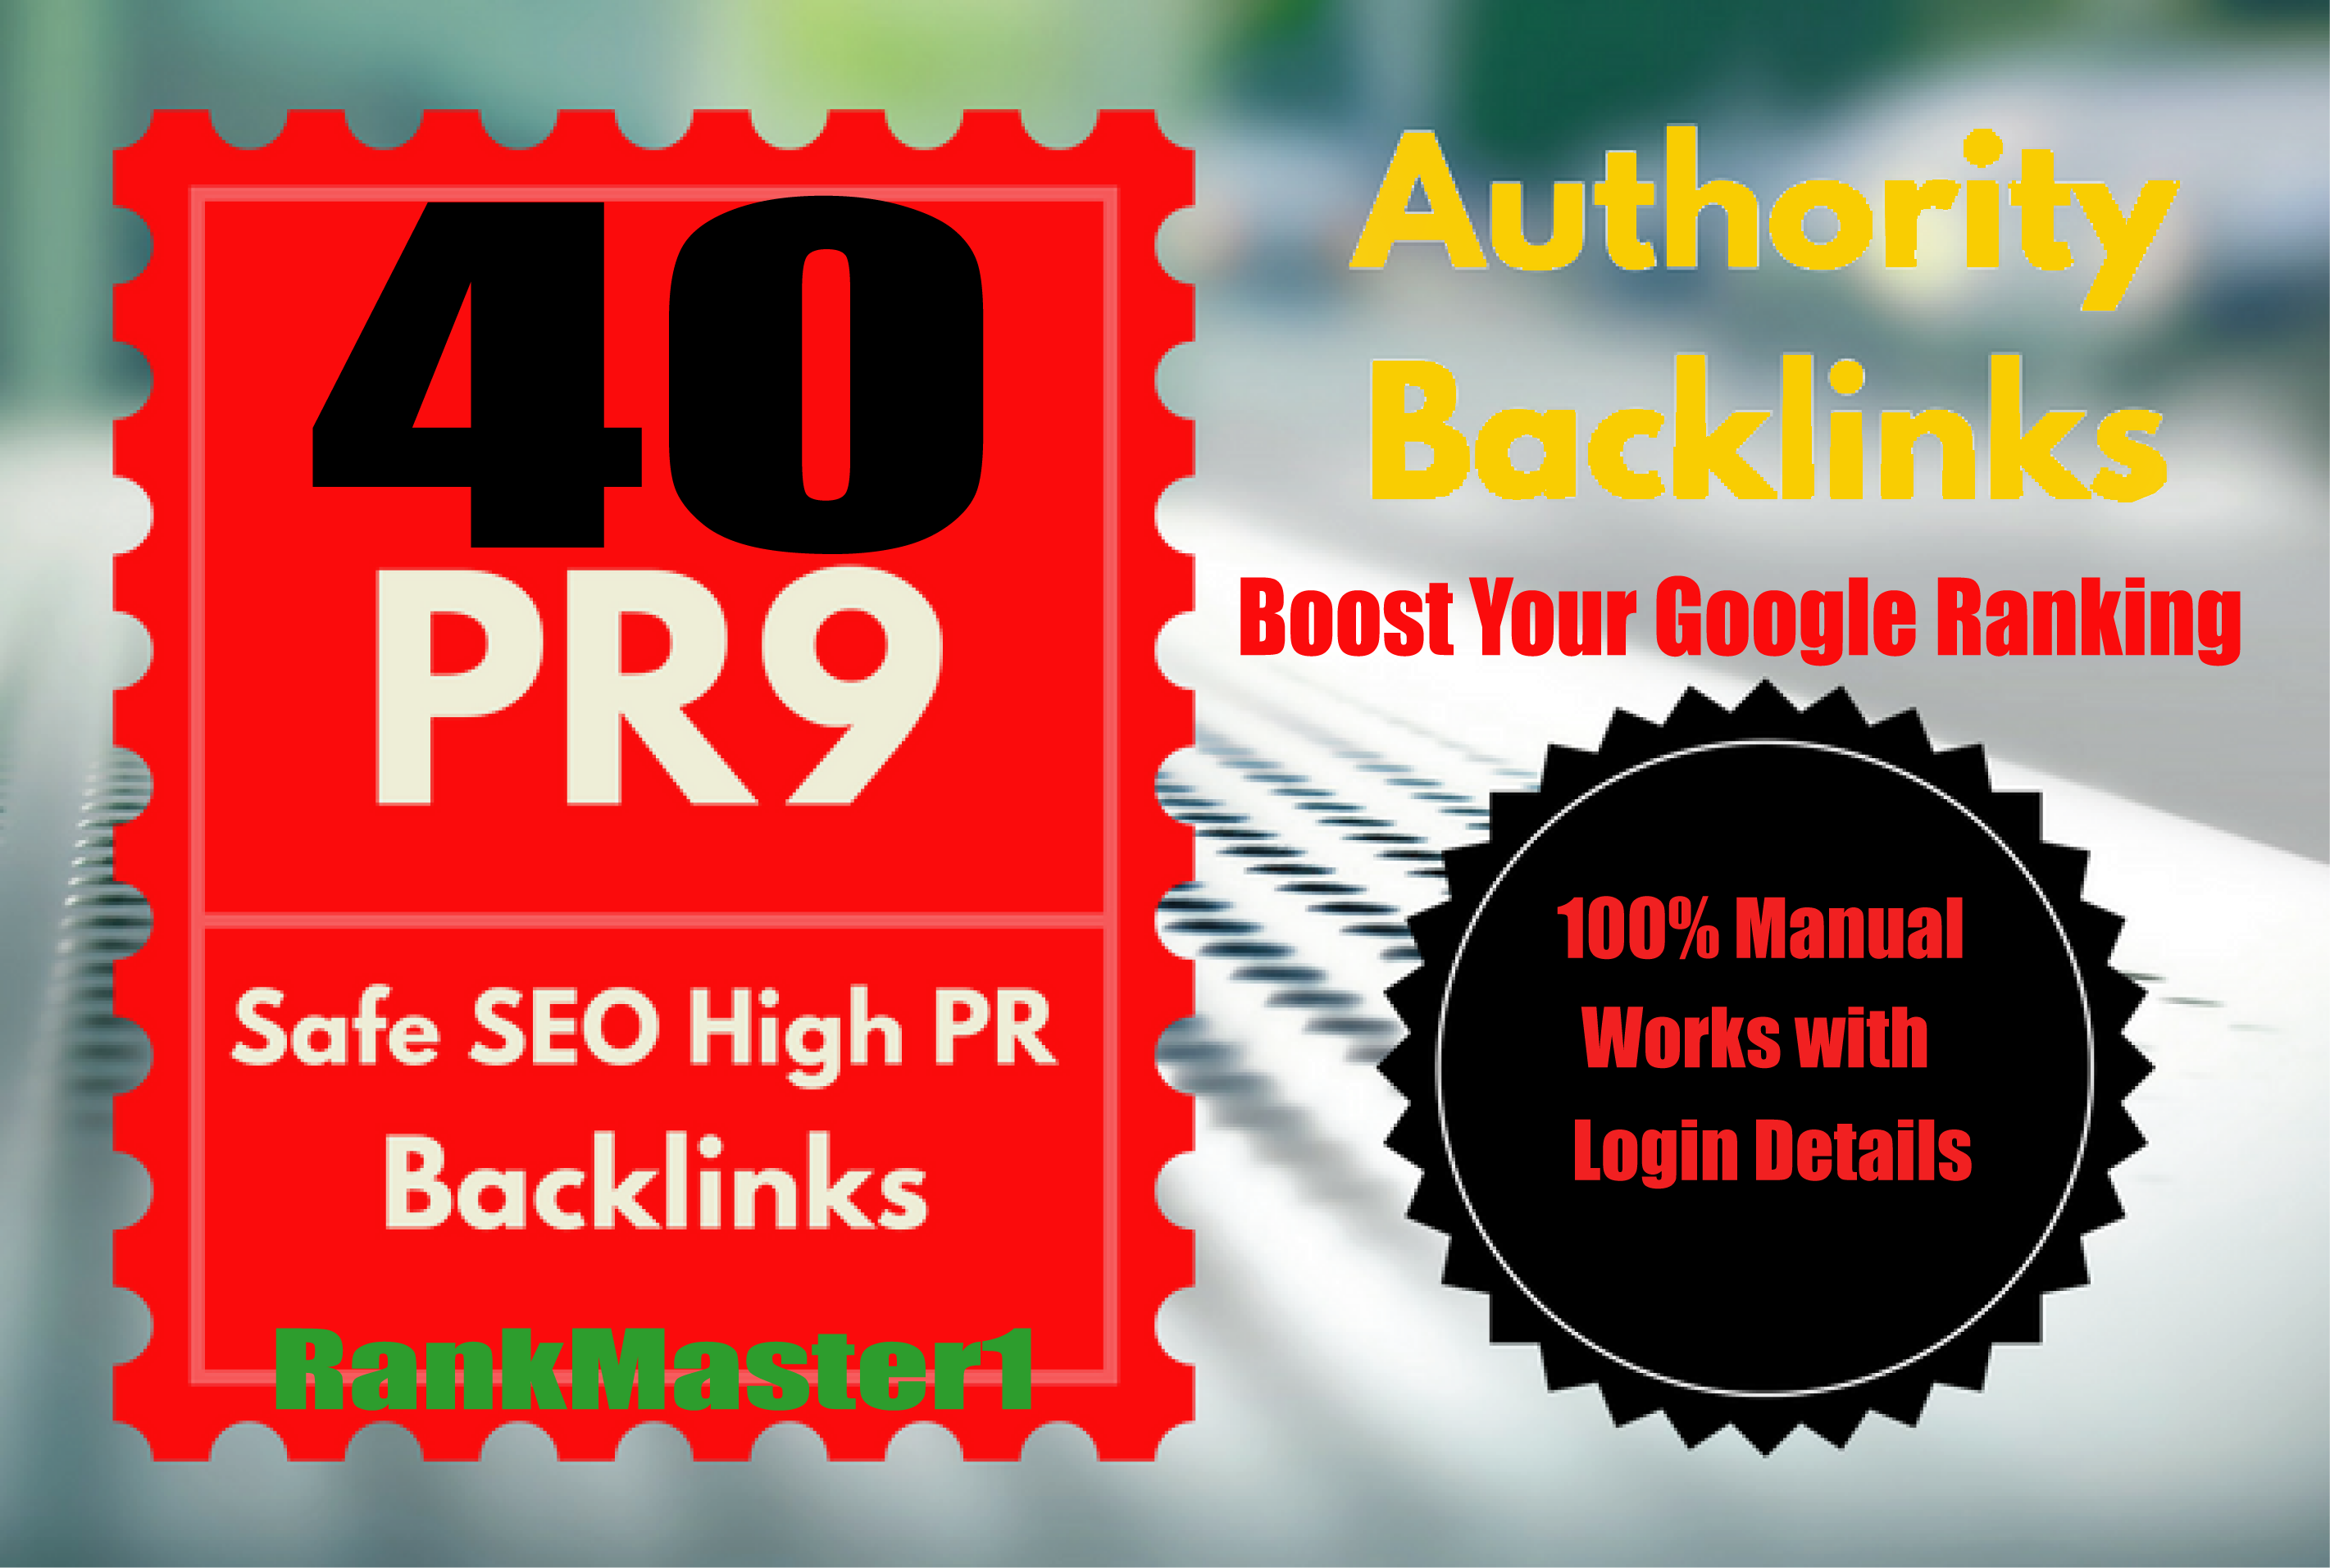 Build 40 PR9 DA 70-100 SEO Backlinks High Trust Authority Domain Permanent Links SERP Results